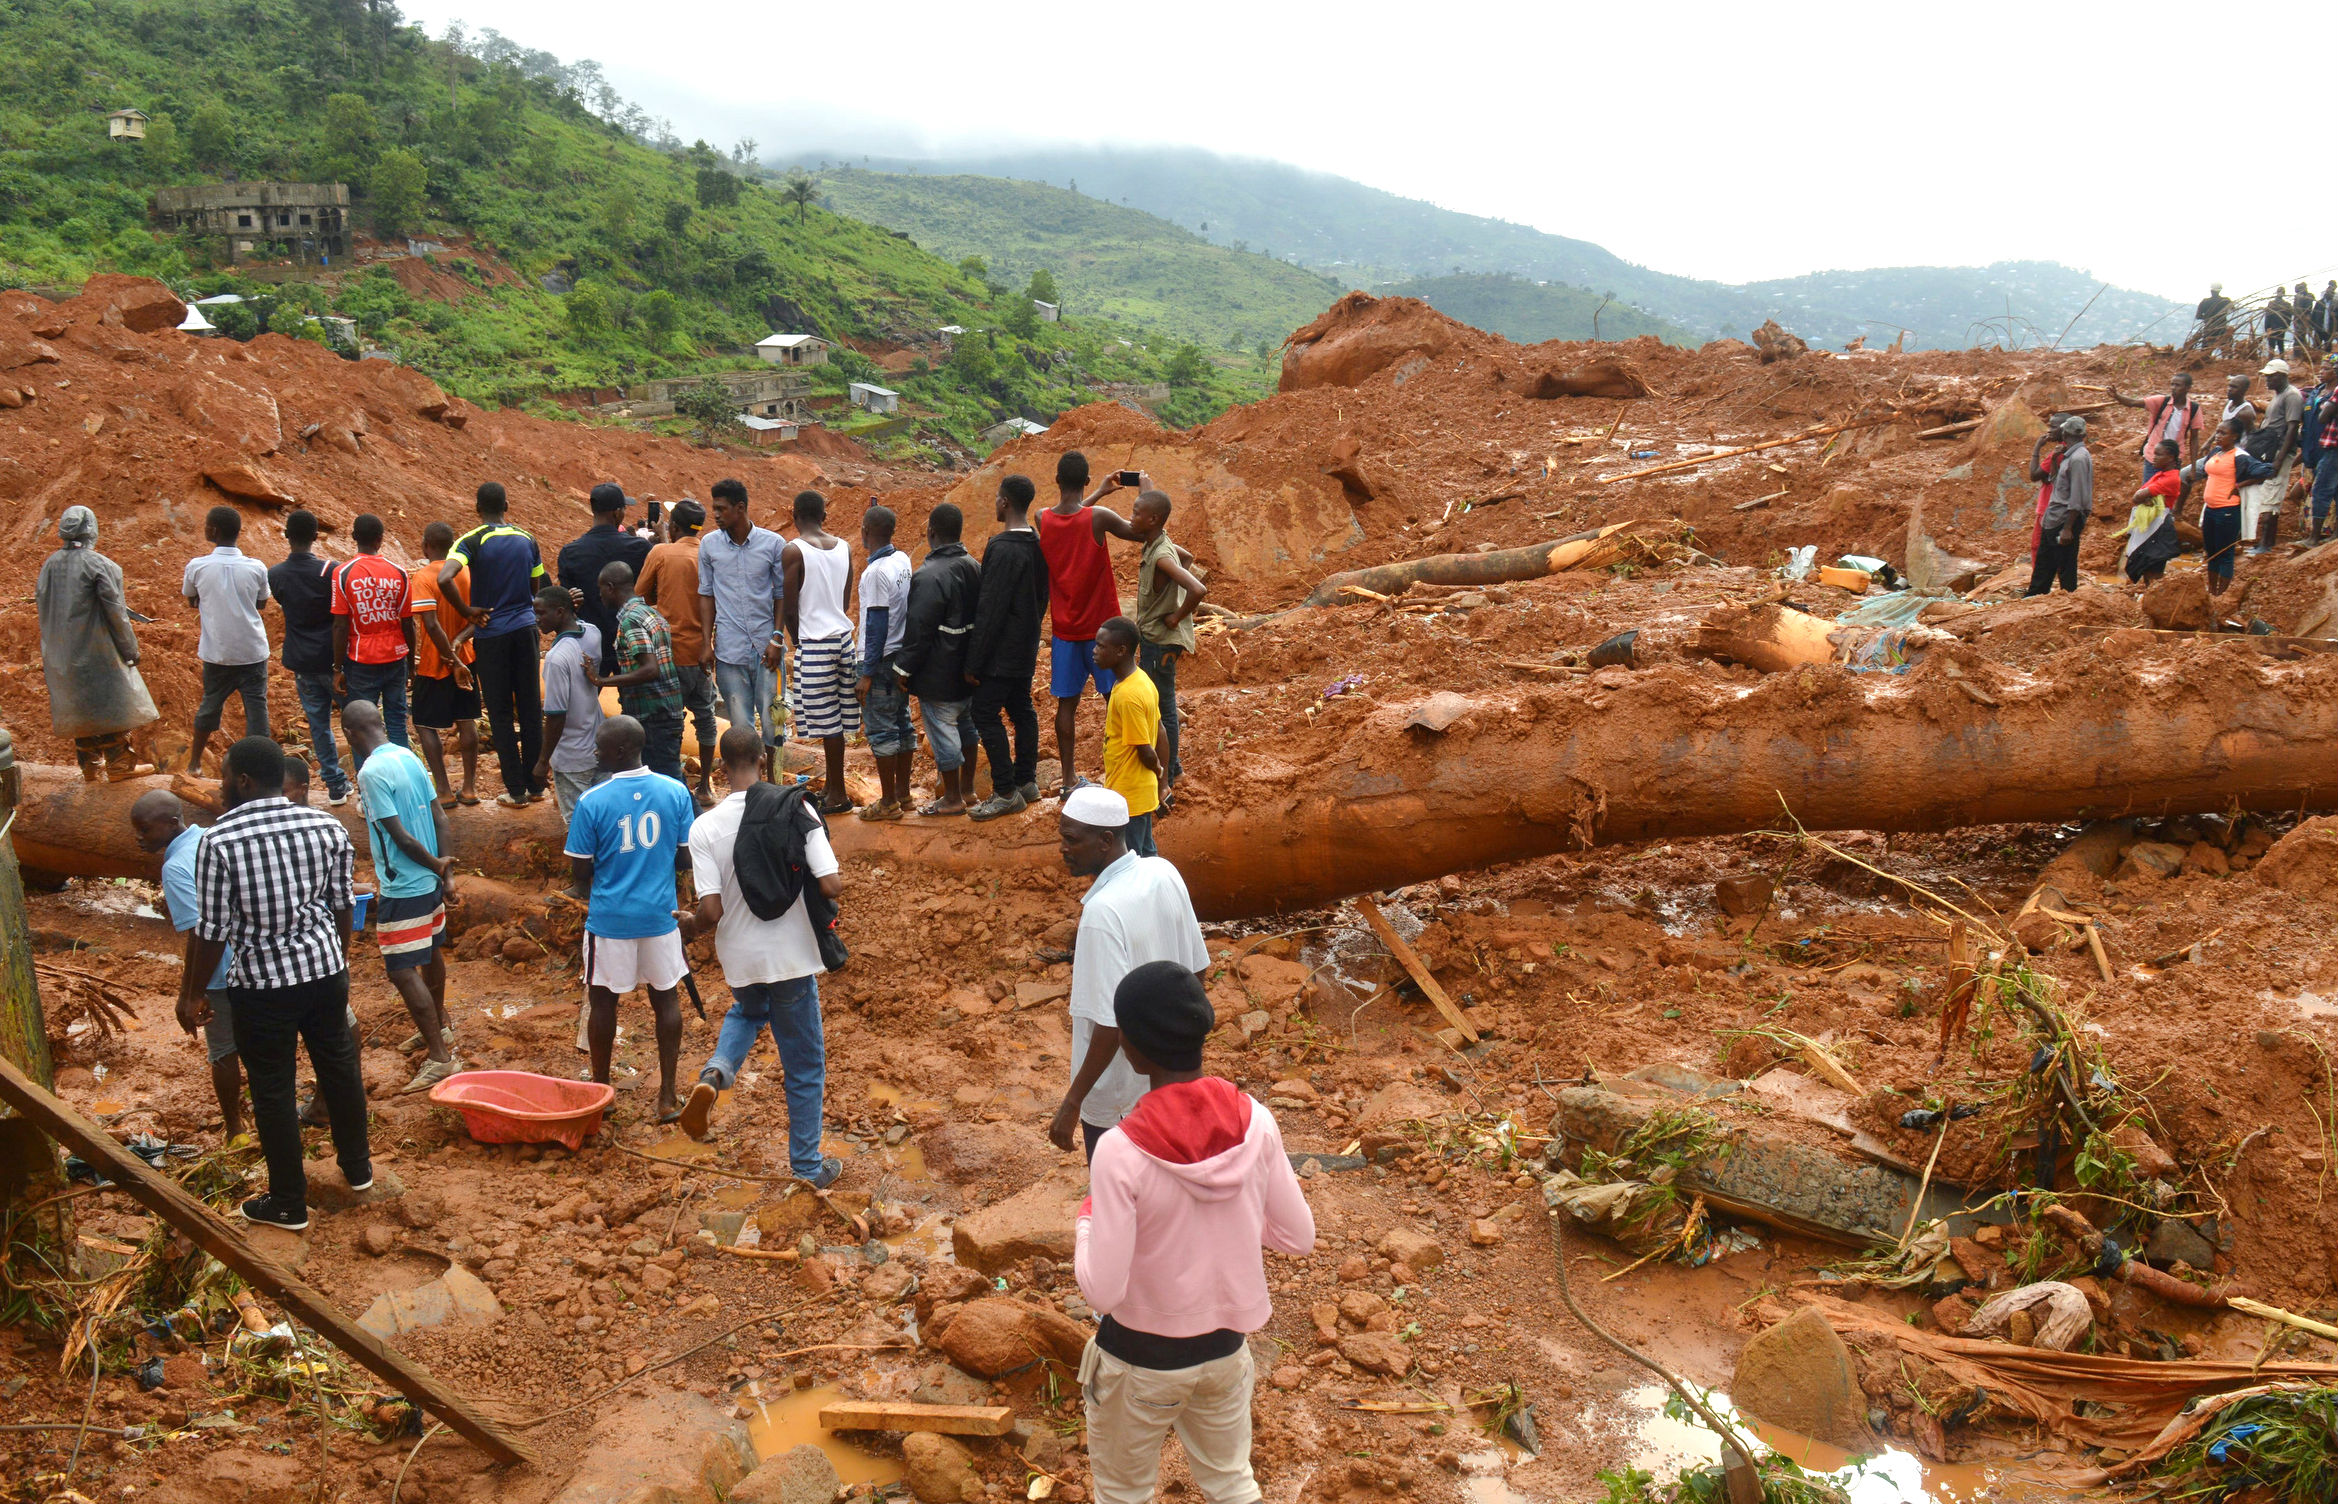 Pope prays for victims of 'devastating' mudslide in Sierra Leone